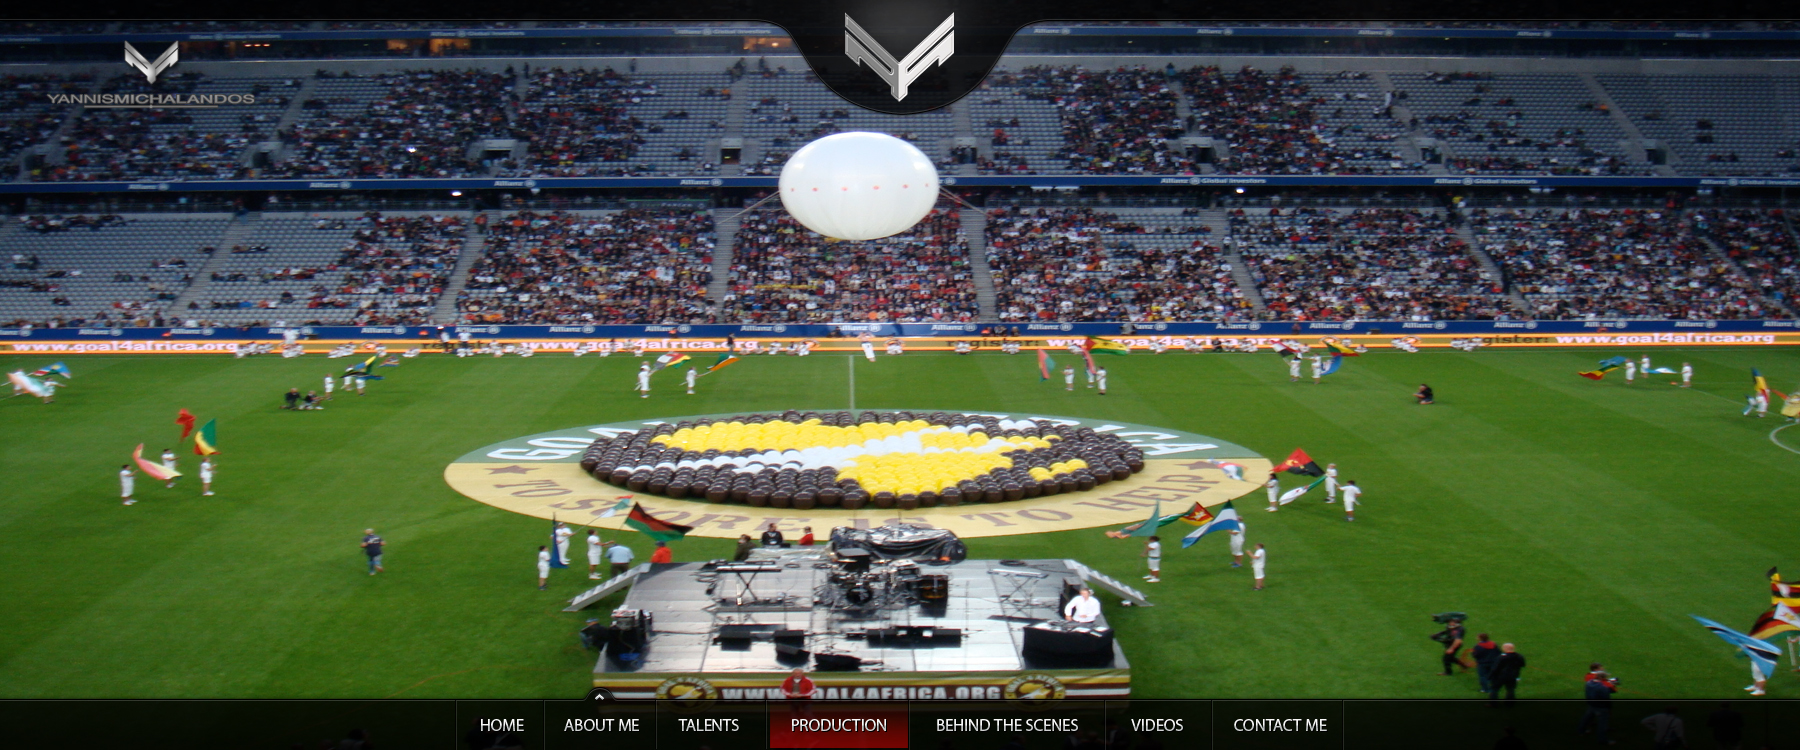 Goal 4 Africa Charity Match for Mandela's 90th Birthday, Allianz Stadium Munich